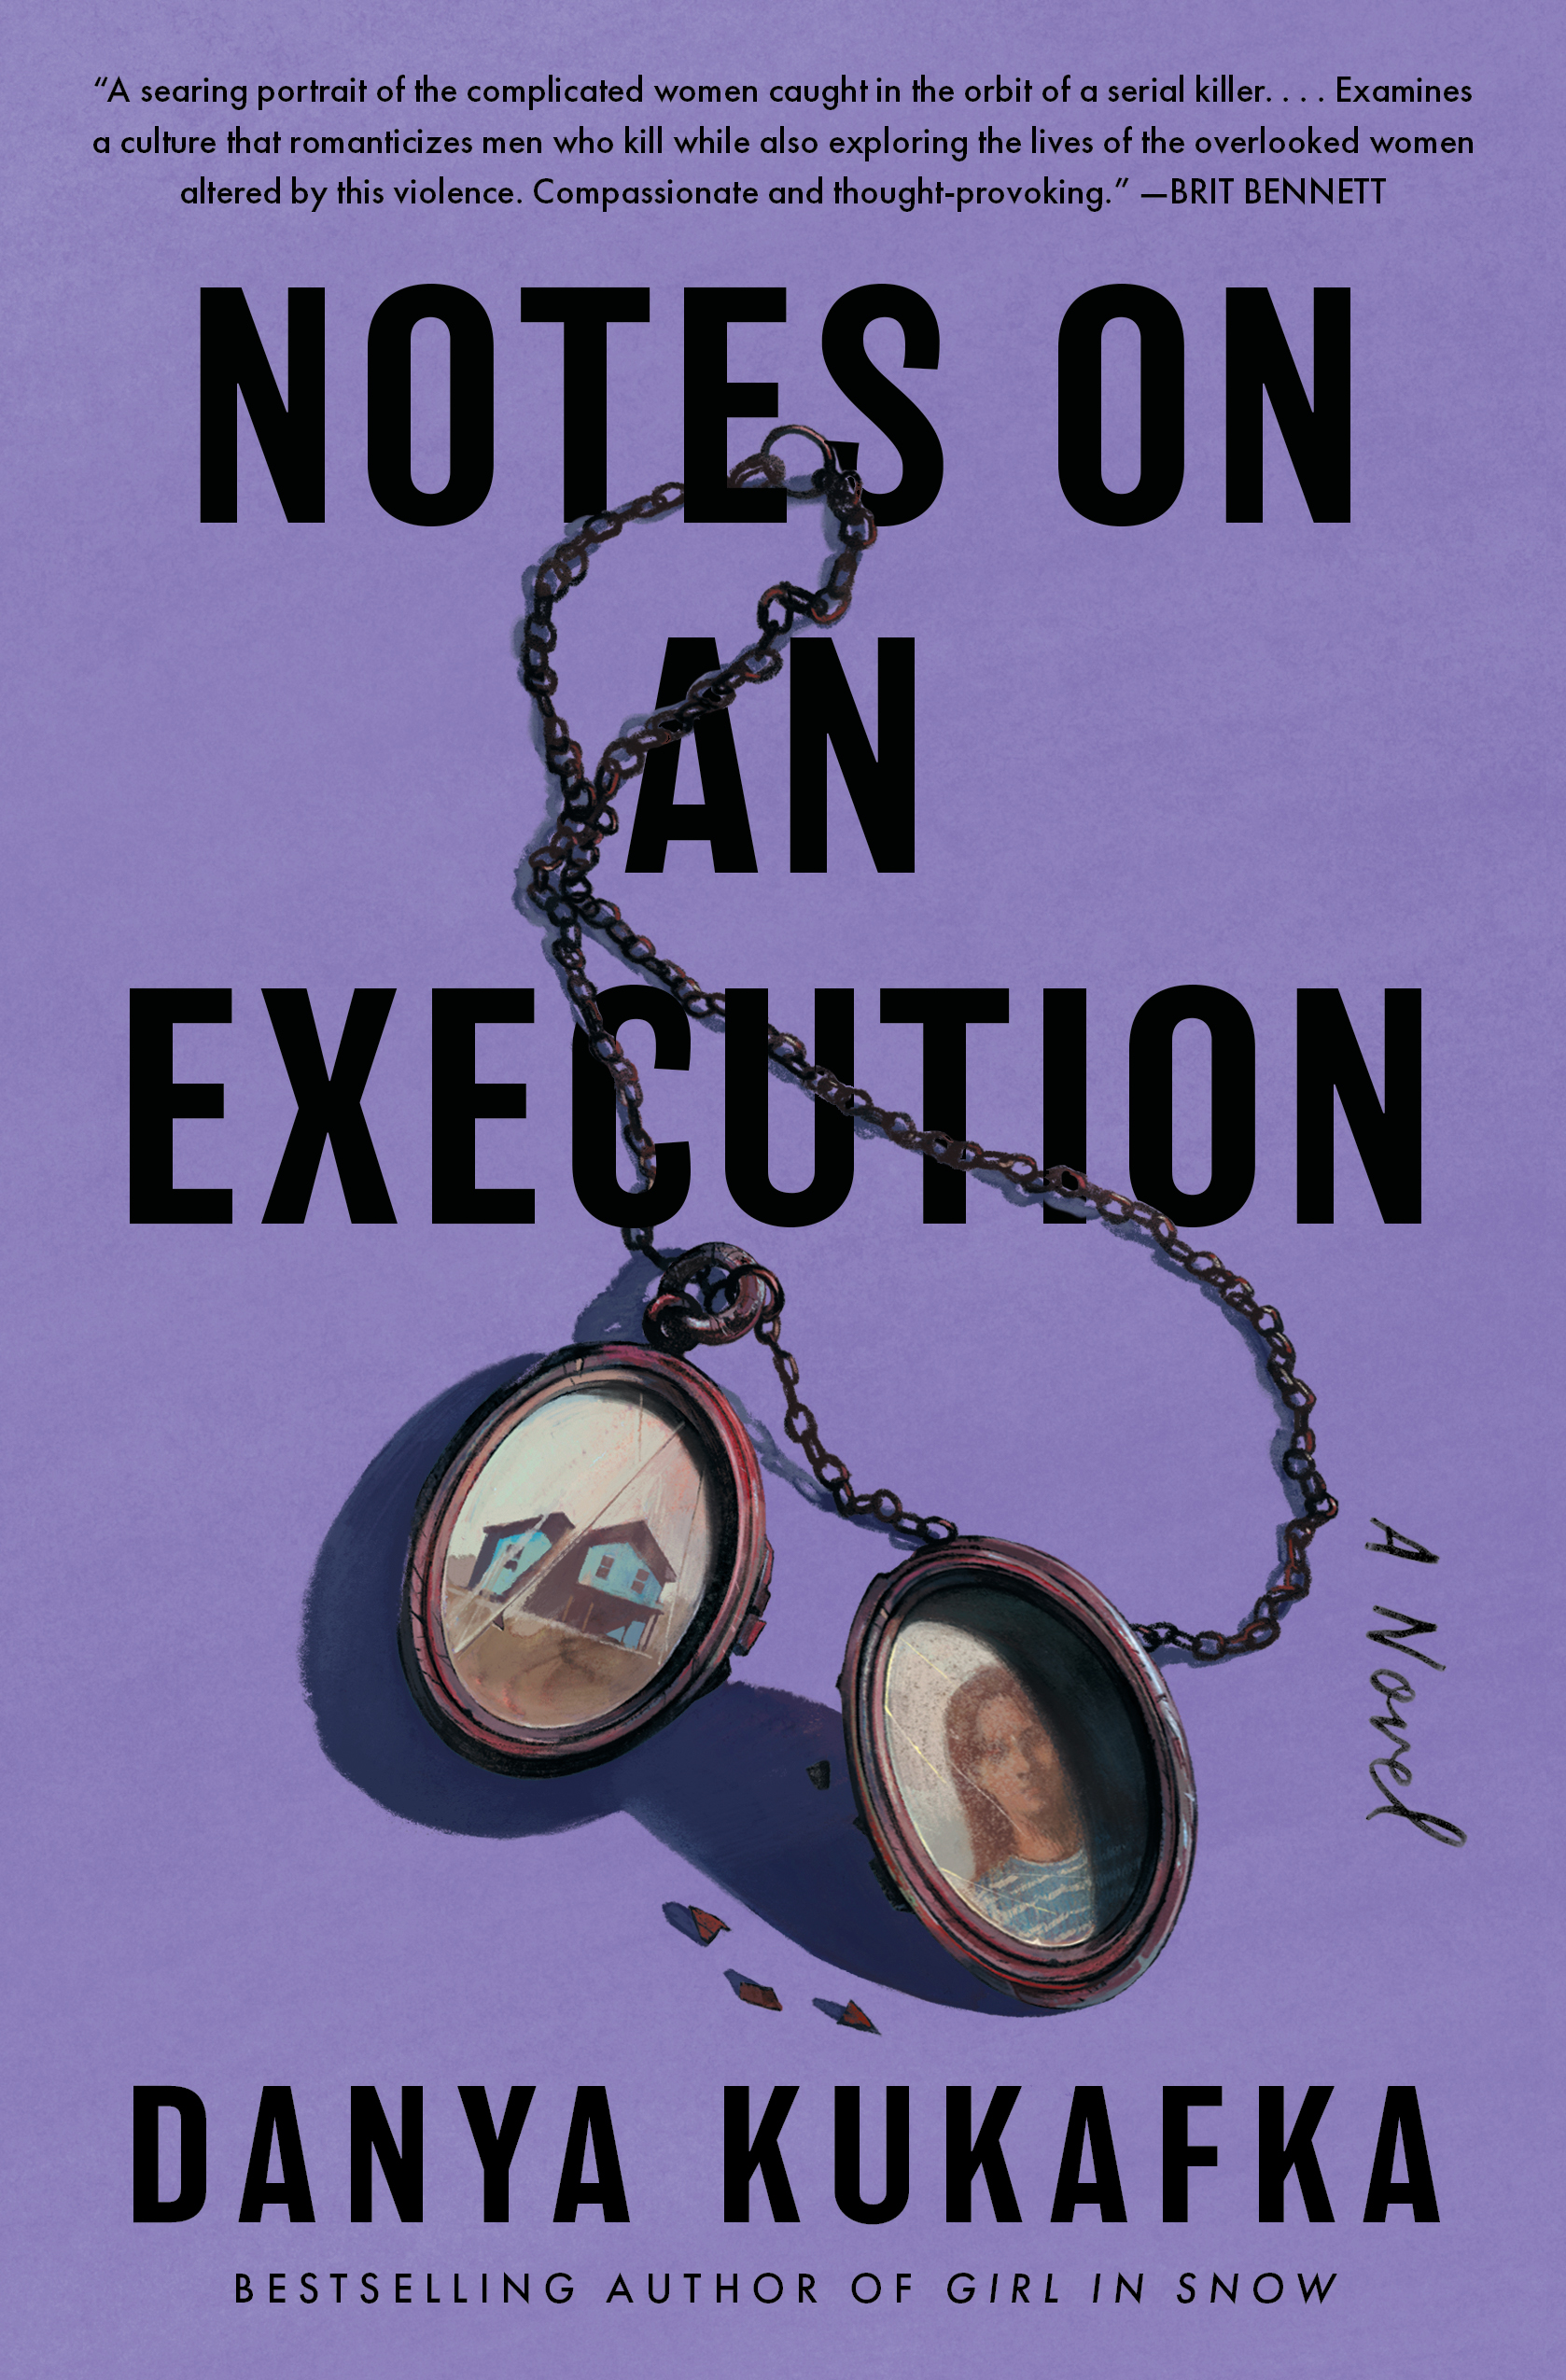 [EPUB] Notes on an Execution by Danya Kukafka